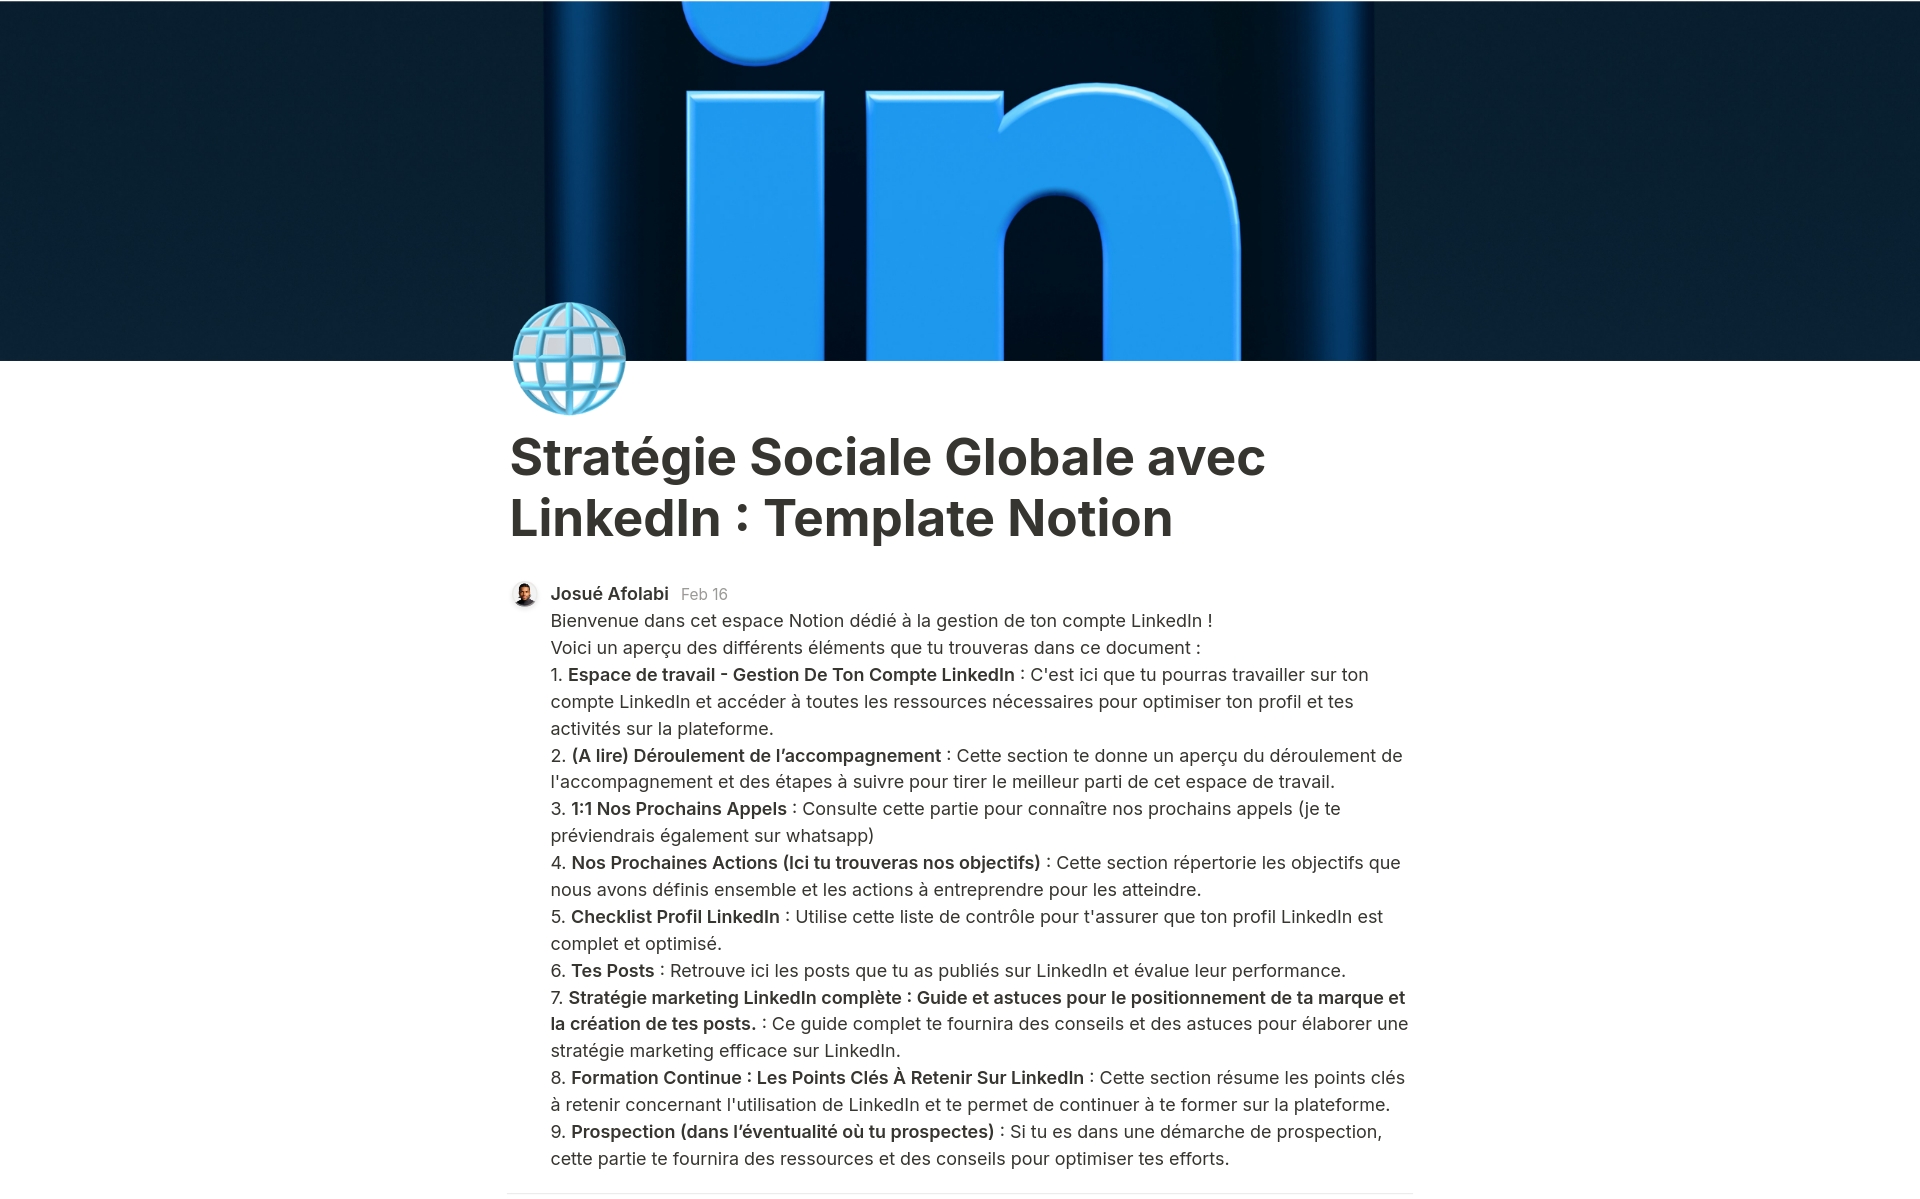 A template preview for Stratégie Sociale Globale avec LinkedIn 